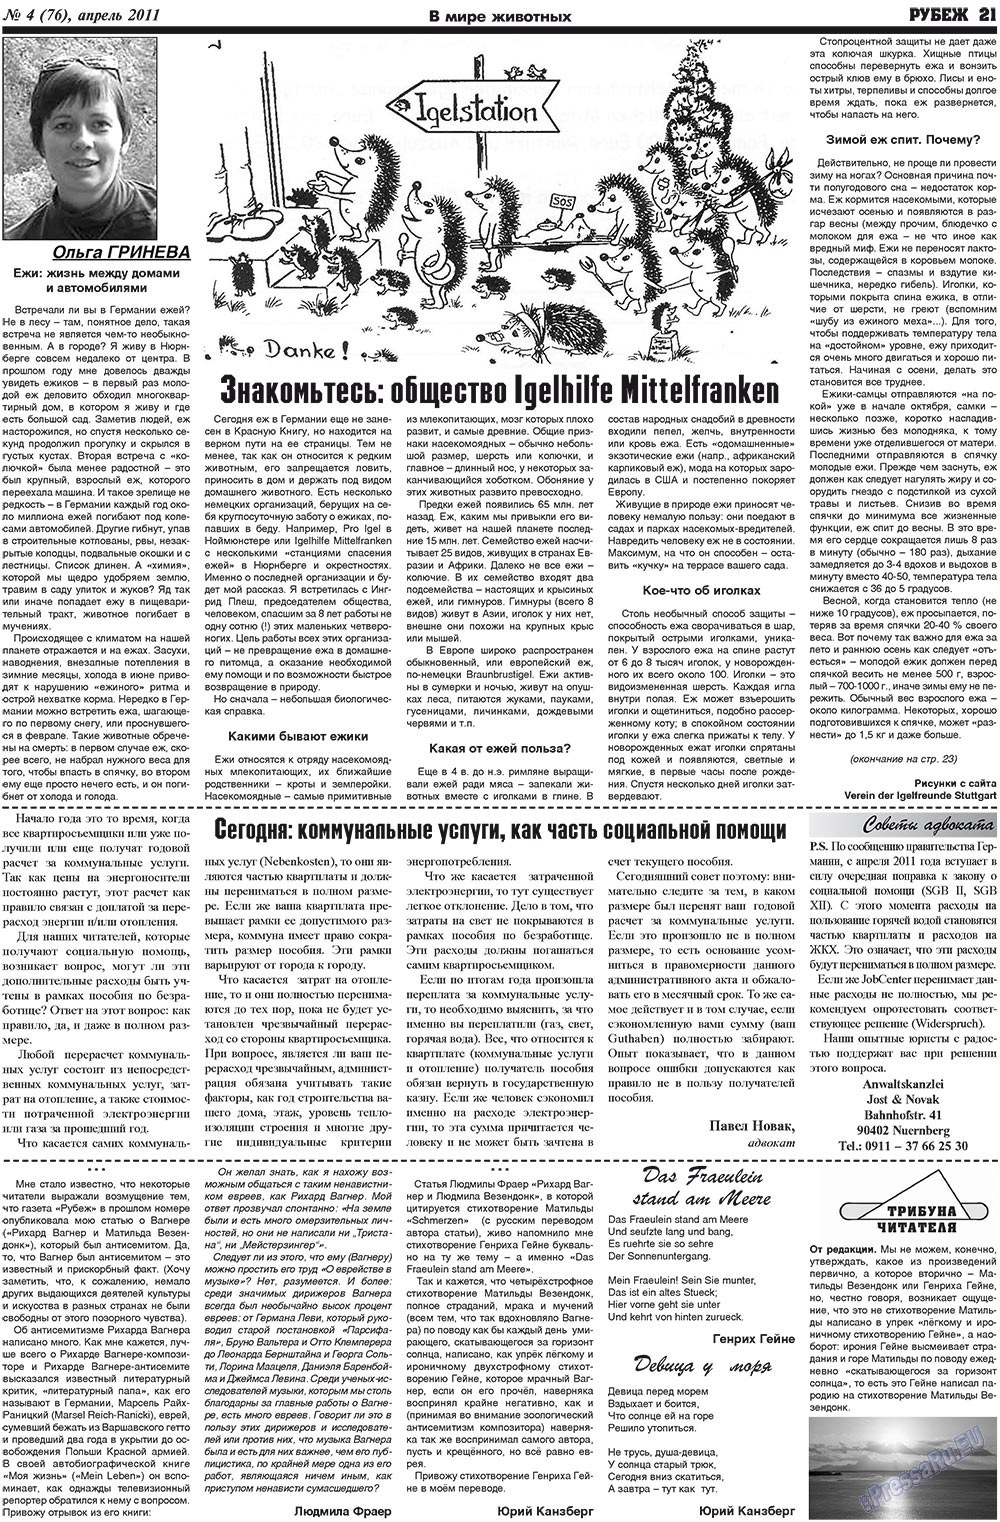 Рубеж, газета. 2011 №4 стр.21